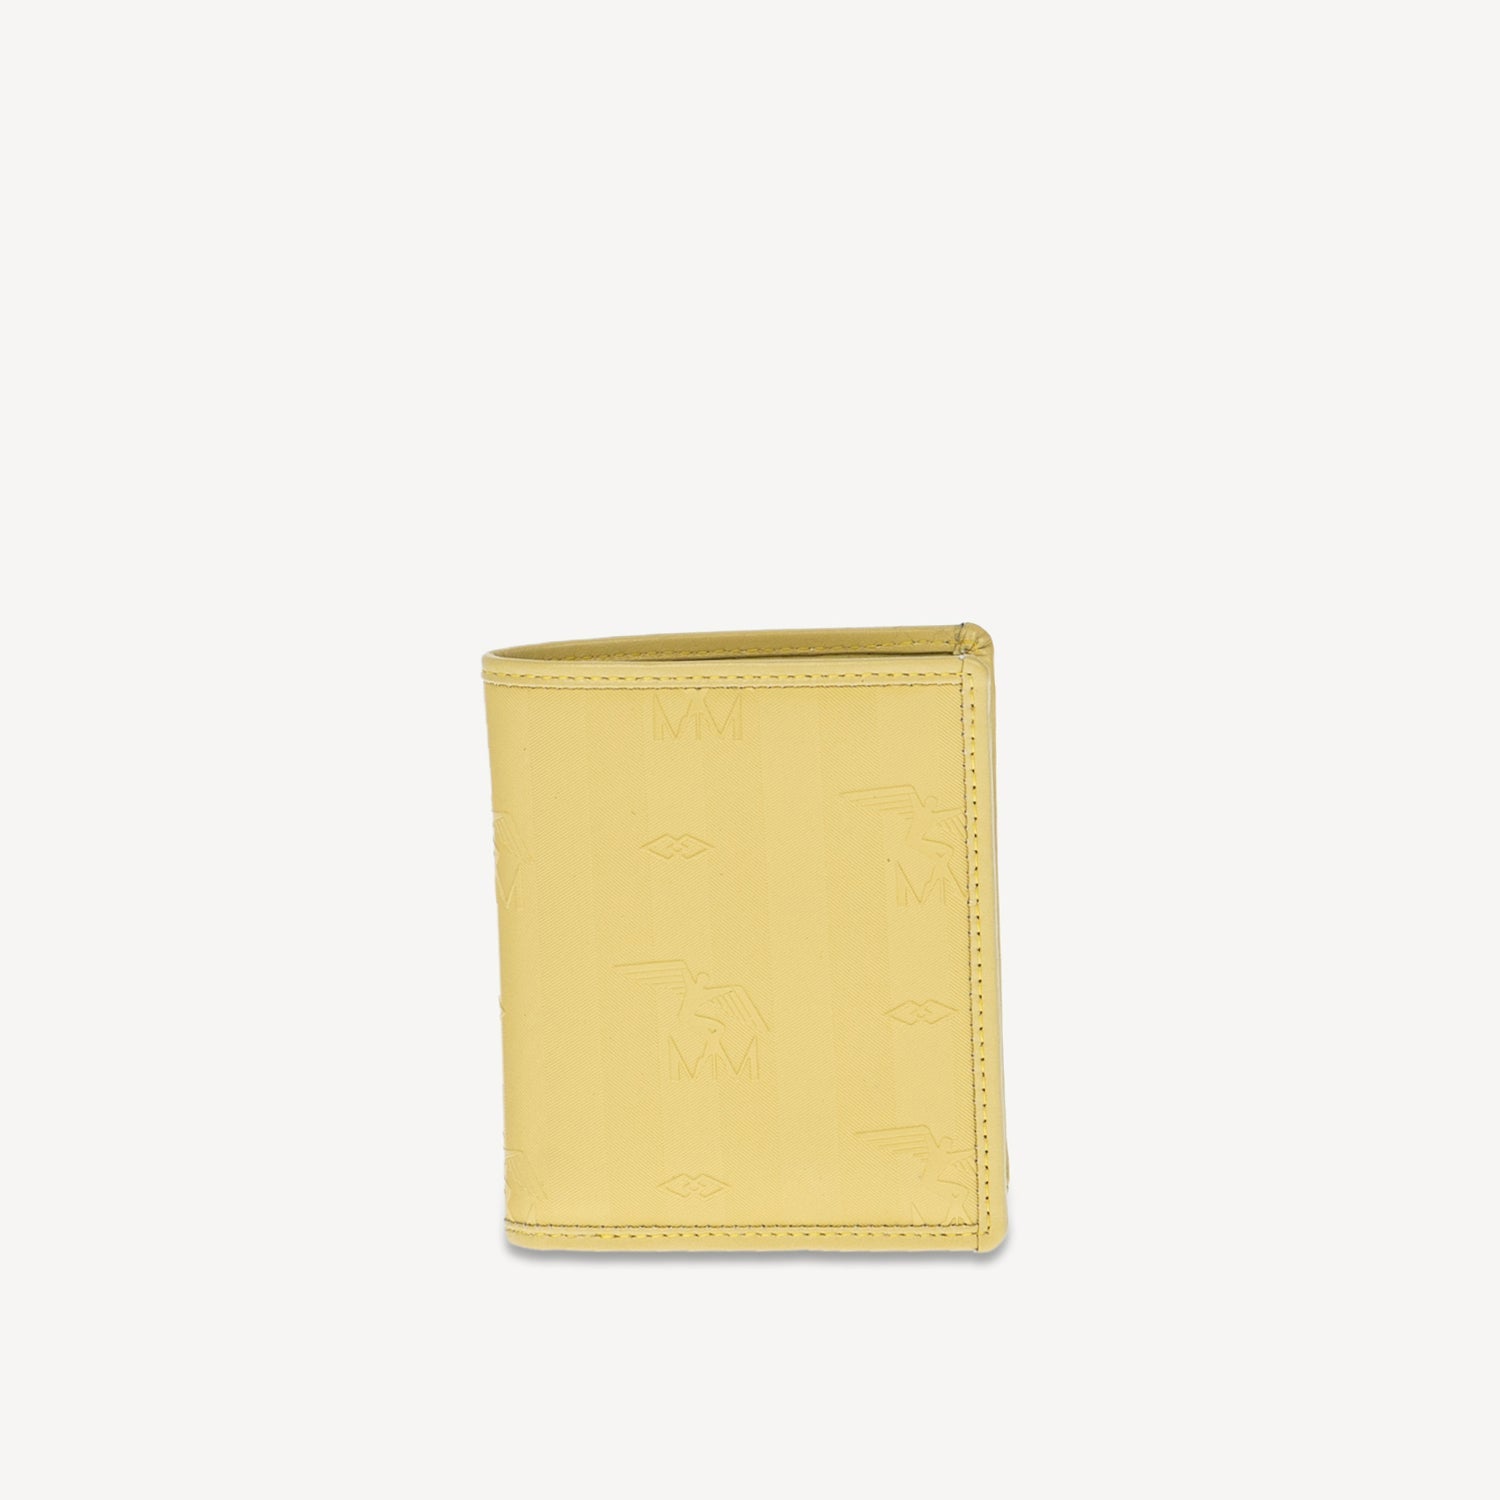 BEVERIN | Portemonnaie ginger gelb/gold